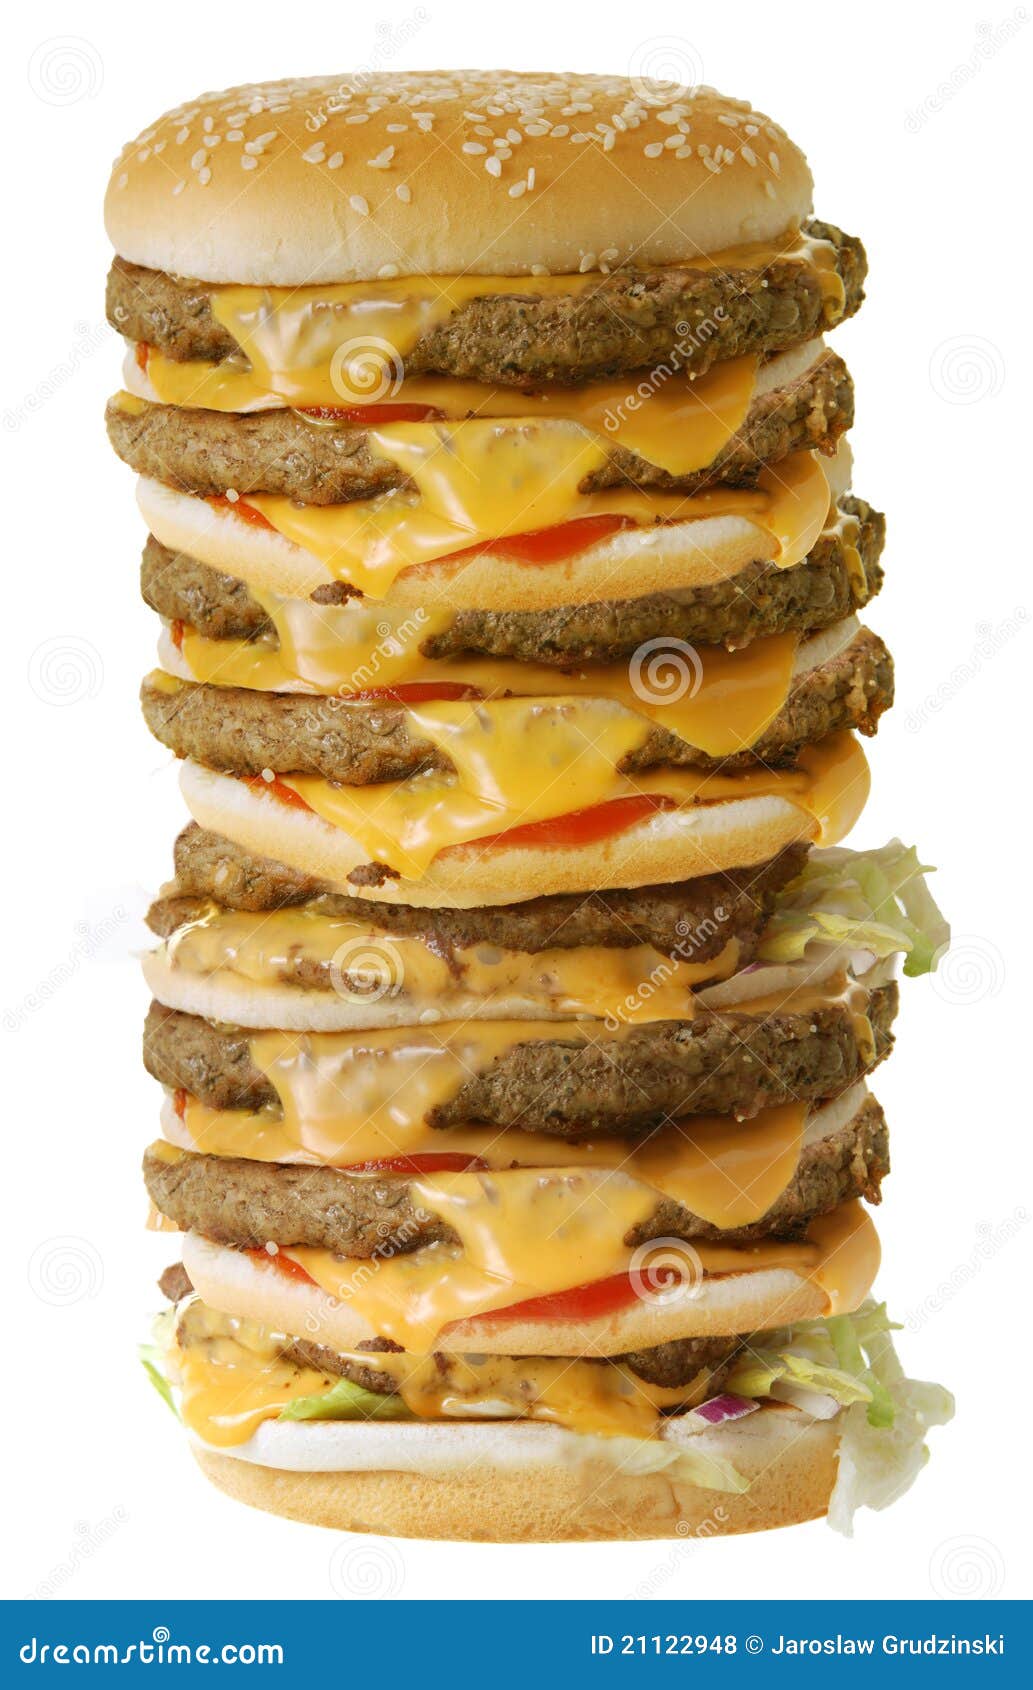 mega cheeseburger